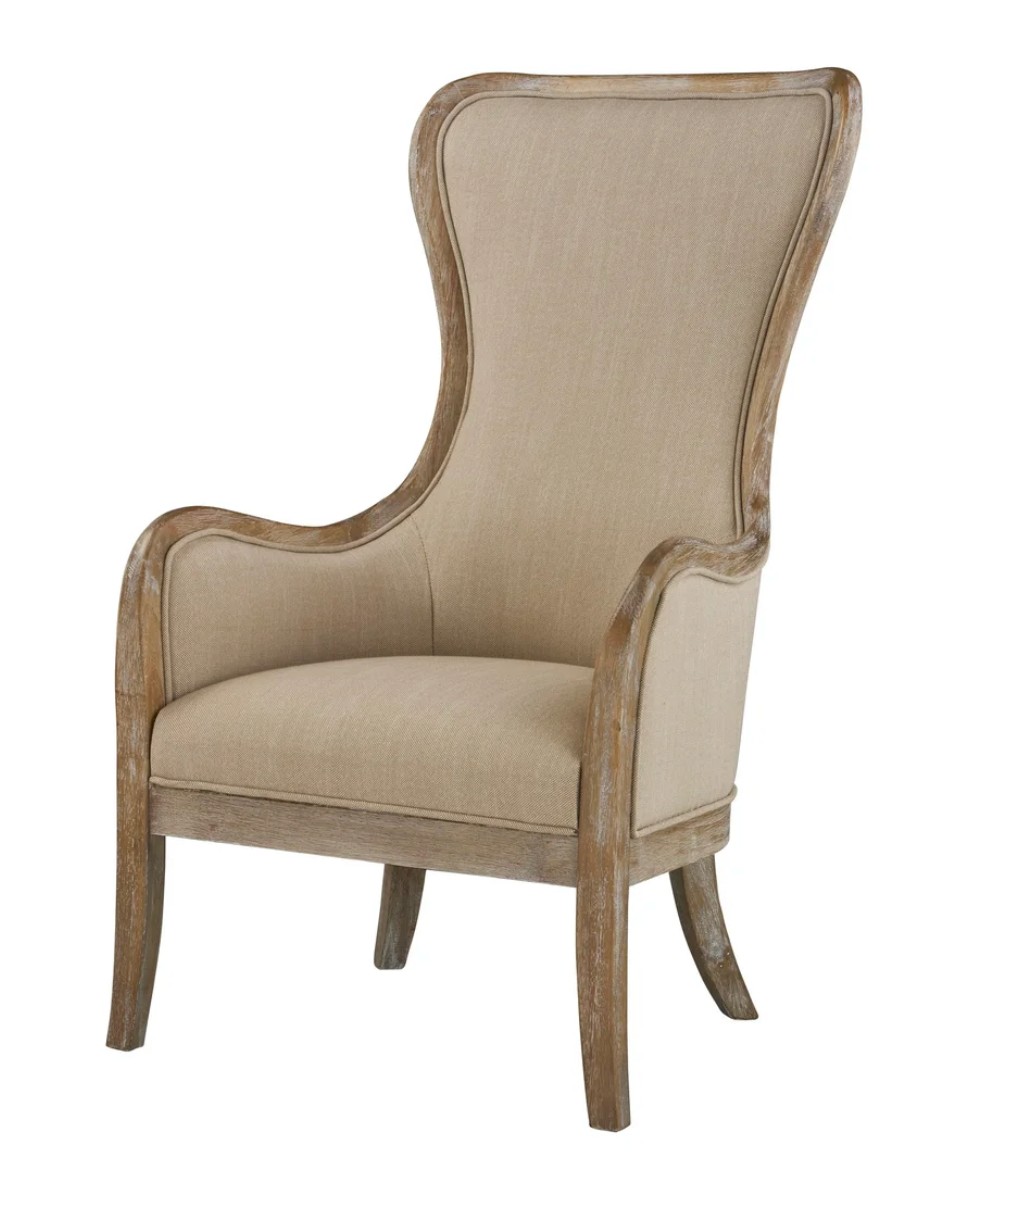 Clarksdale Arm Chair - Sand Linen + Driftwood